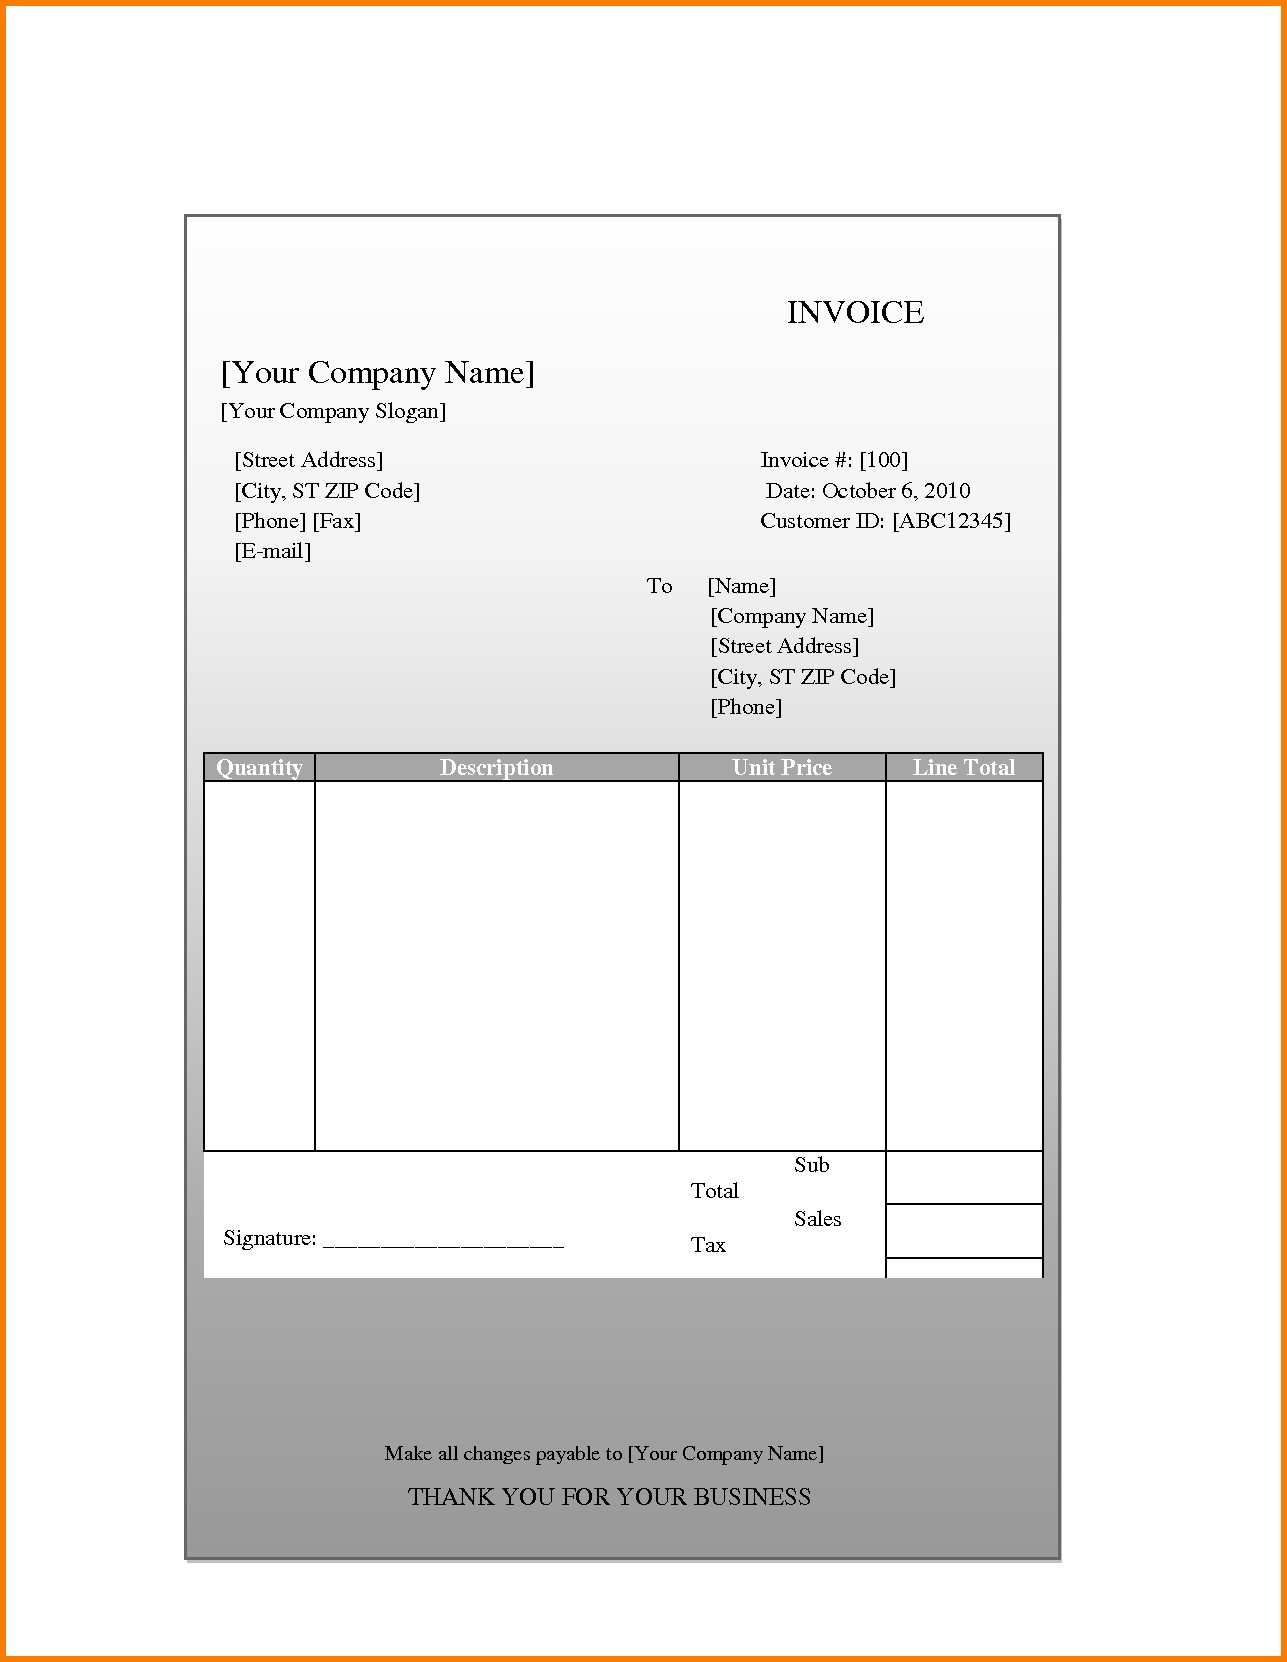 generic invoice template invoice example - generic invoice template ...